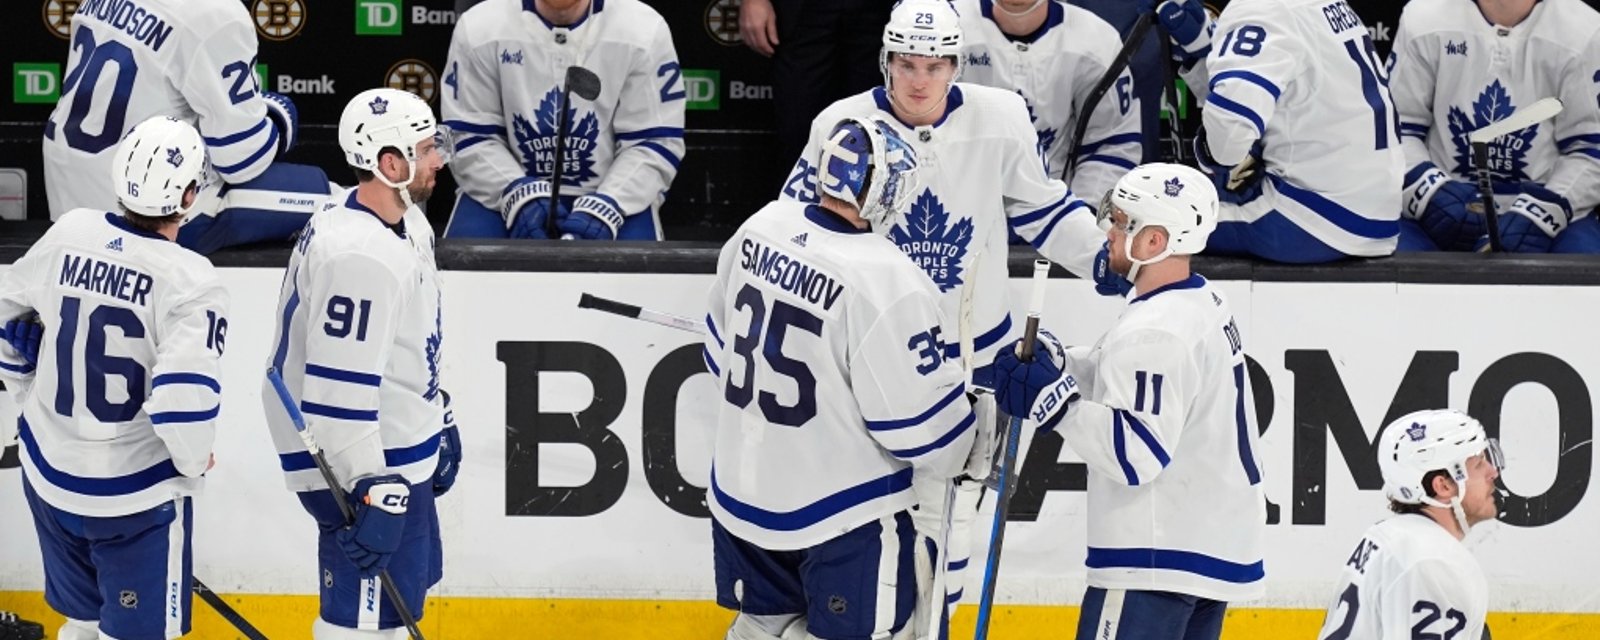 Toronto media personality blasts Leafs: “Grow up” 